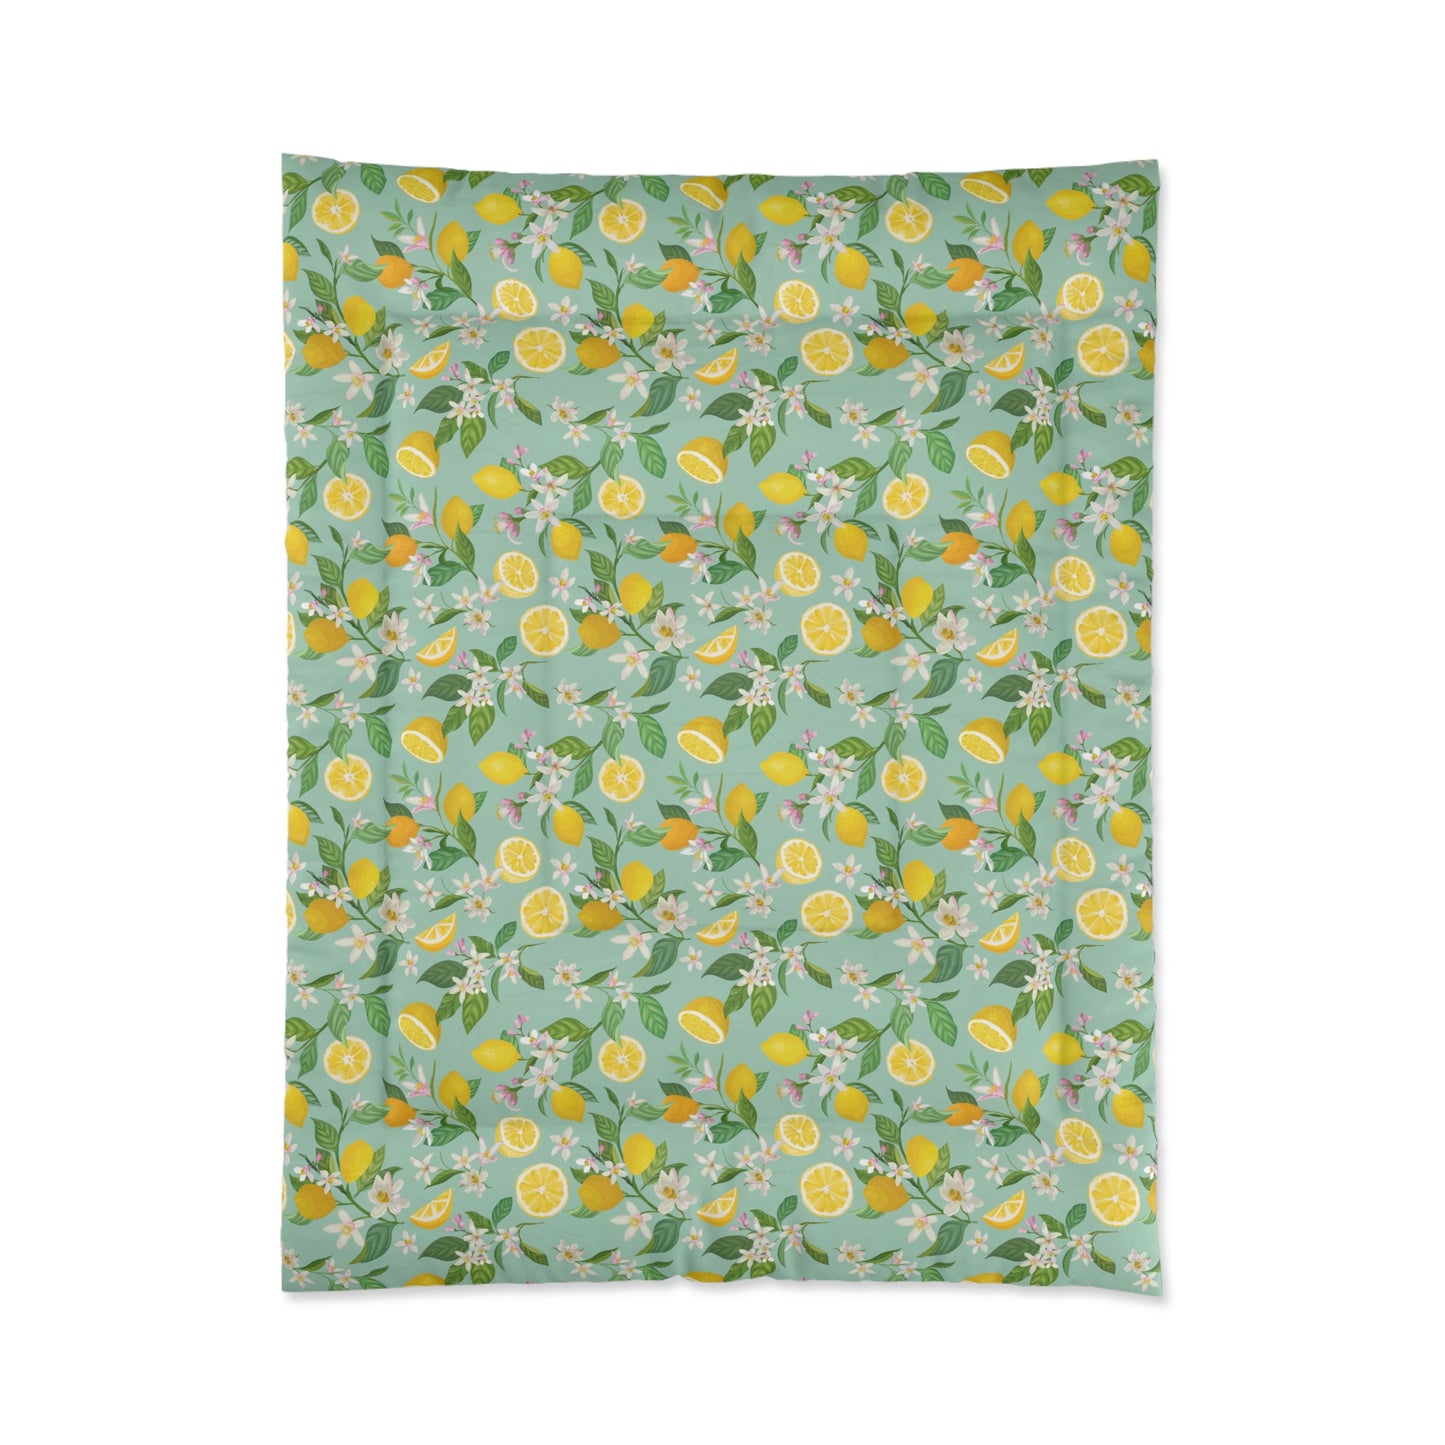 Lemons and Flowers Comforter